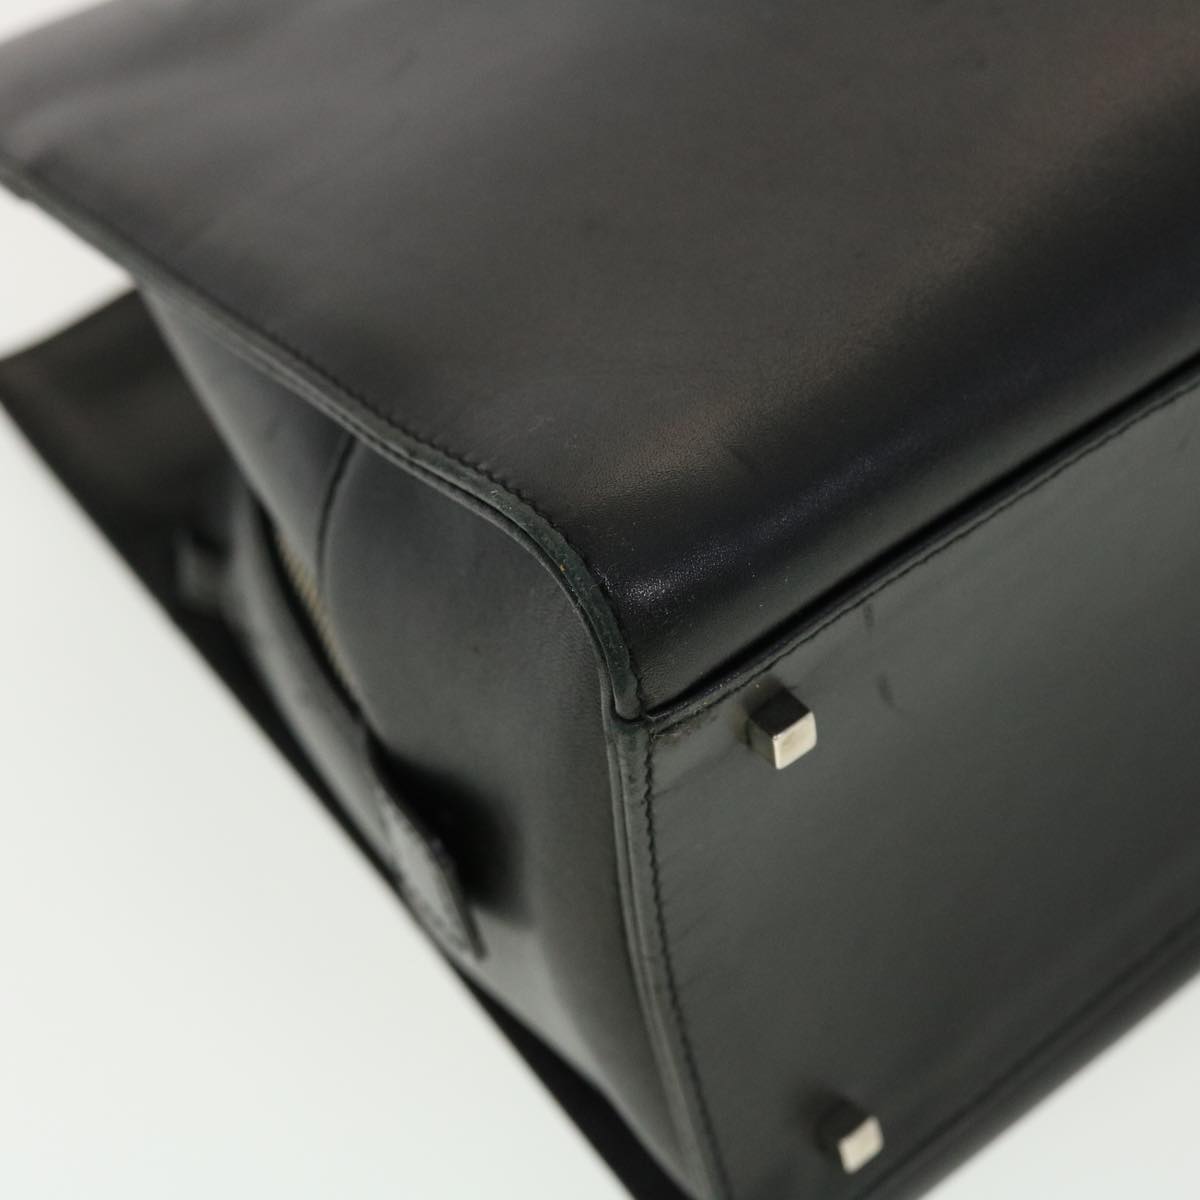 Salvatore Ferragamo Hand Bag Leather Black Auth cl501